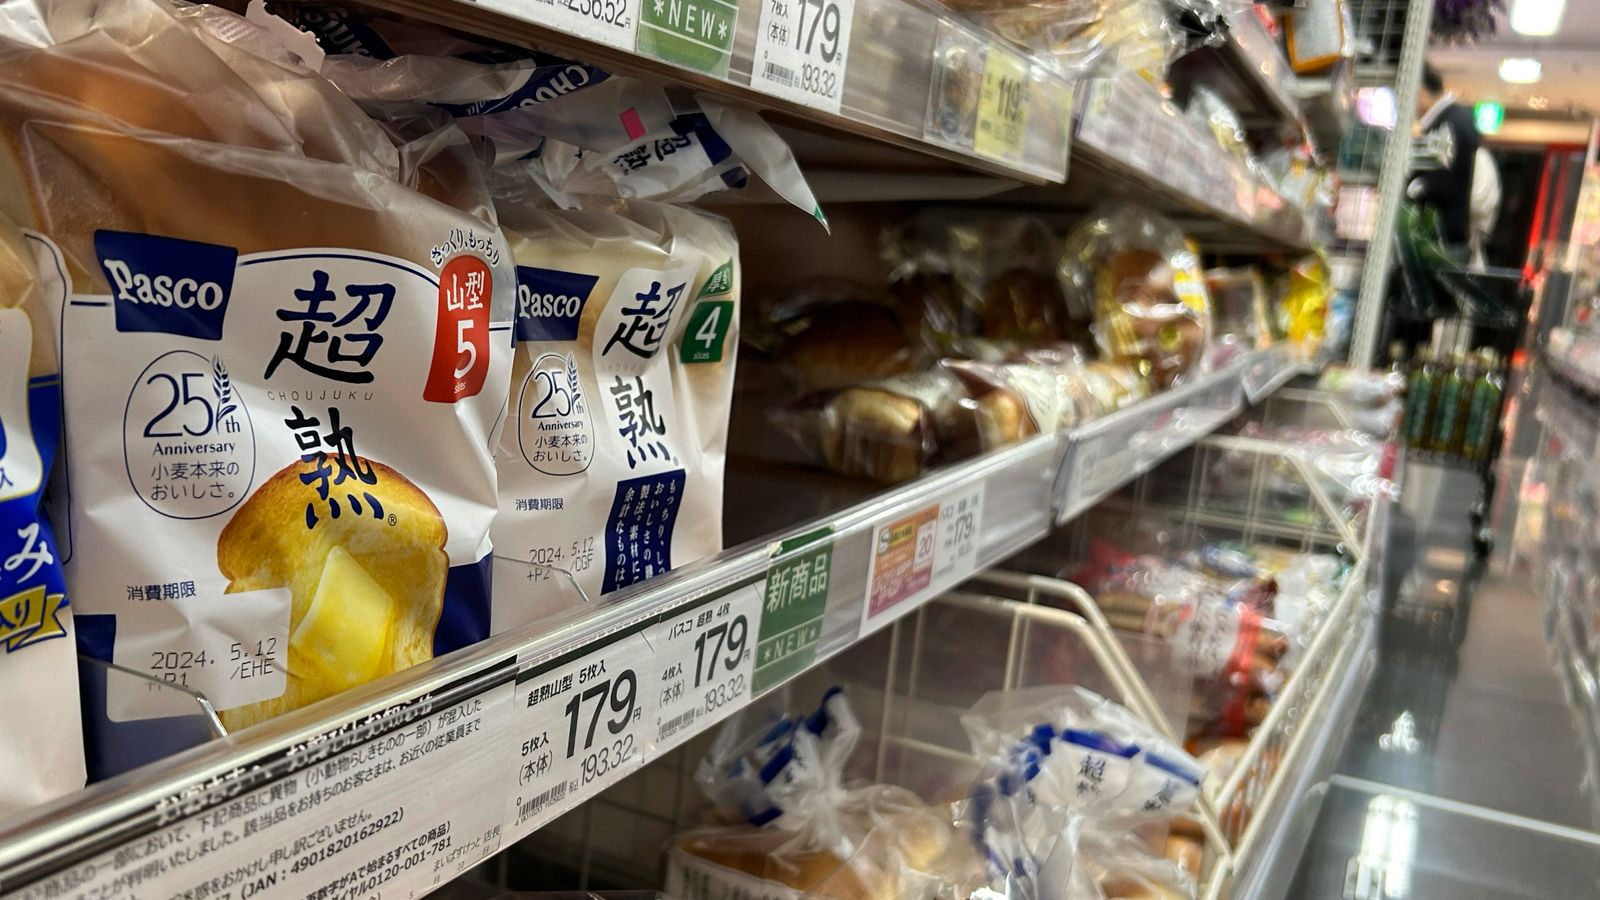 Pasco Shikishima Corp, която произвежда хляба, каза, че 104 000